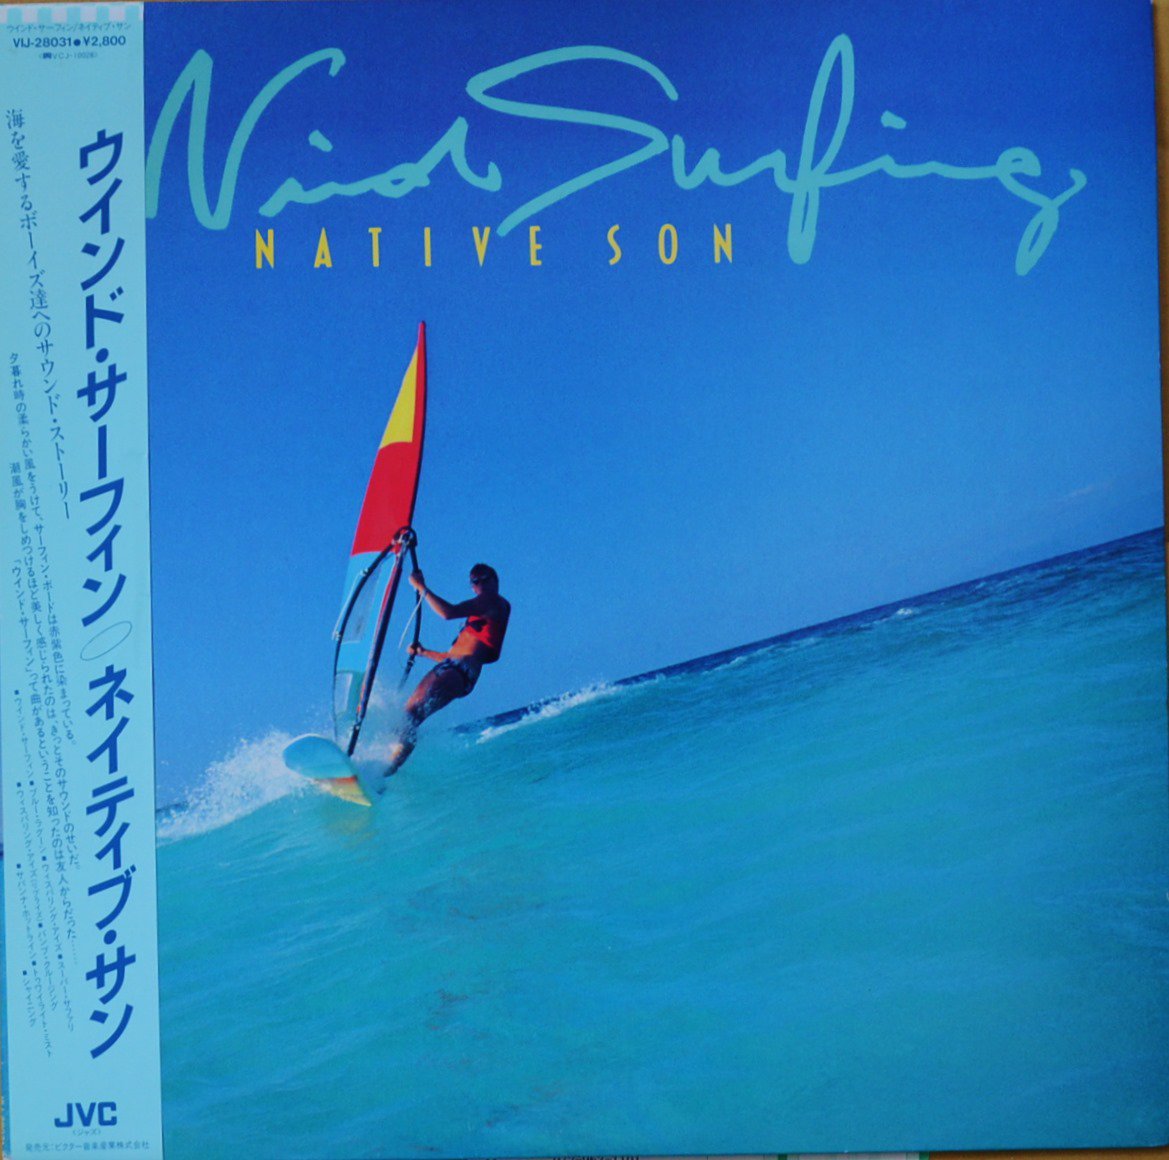 NATIVE SON ネイティブ・サン / ウインド・サーフィン WIND SURFING